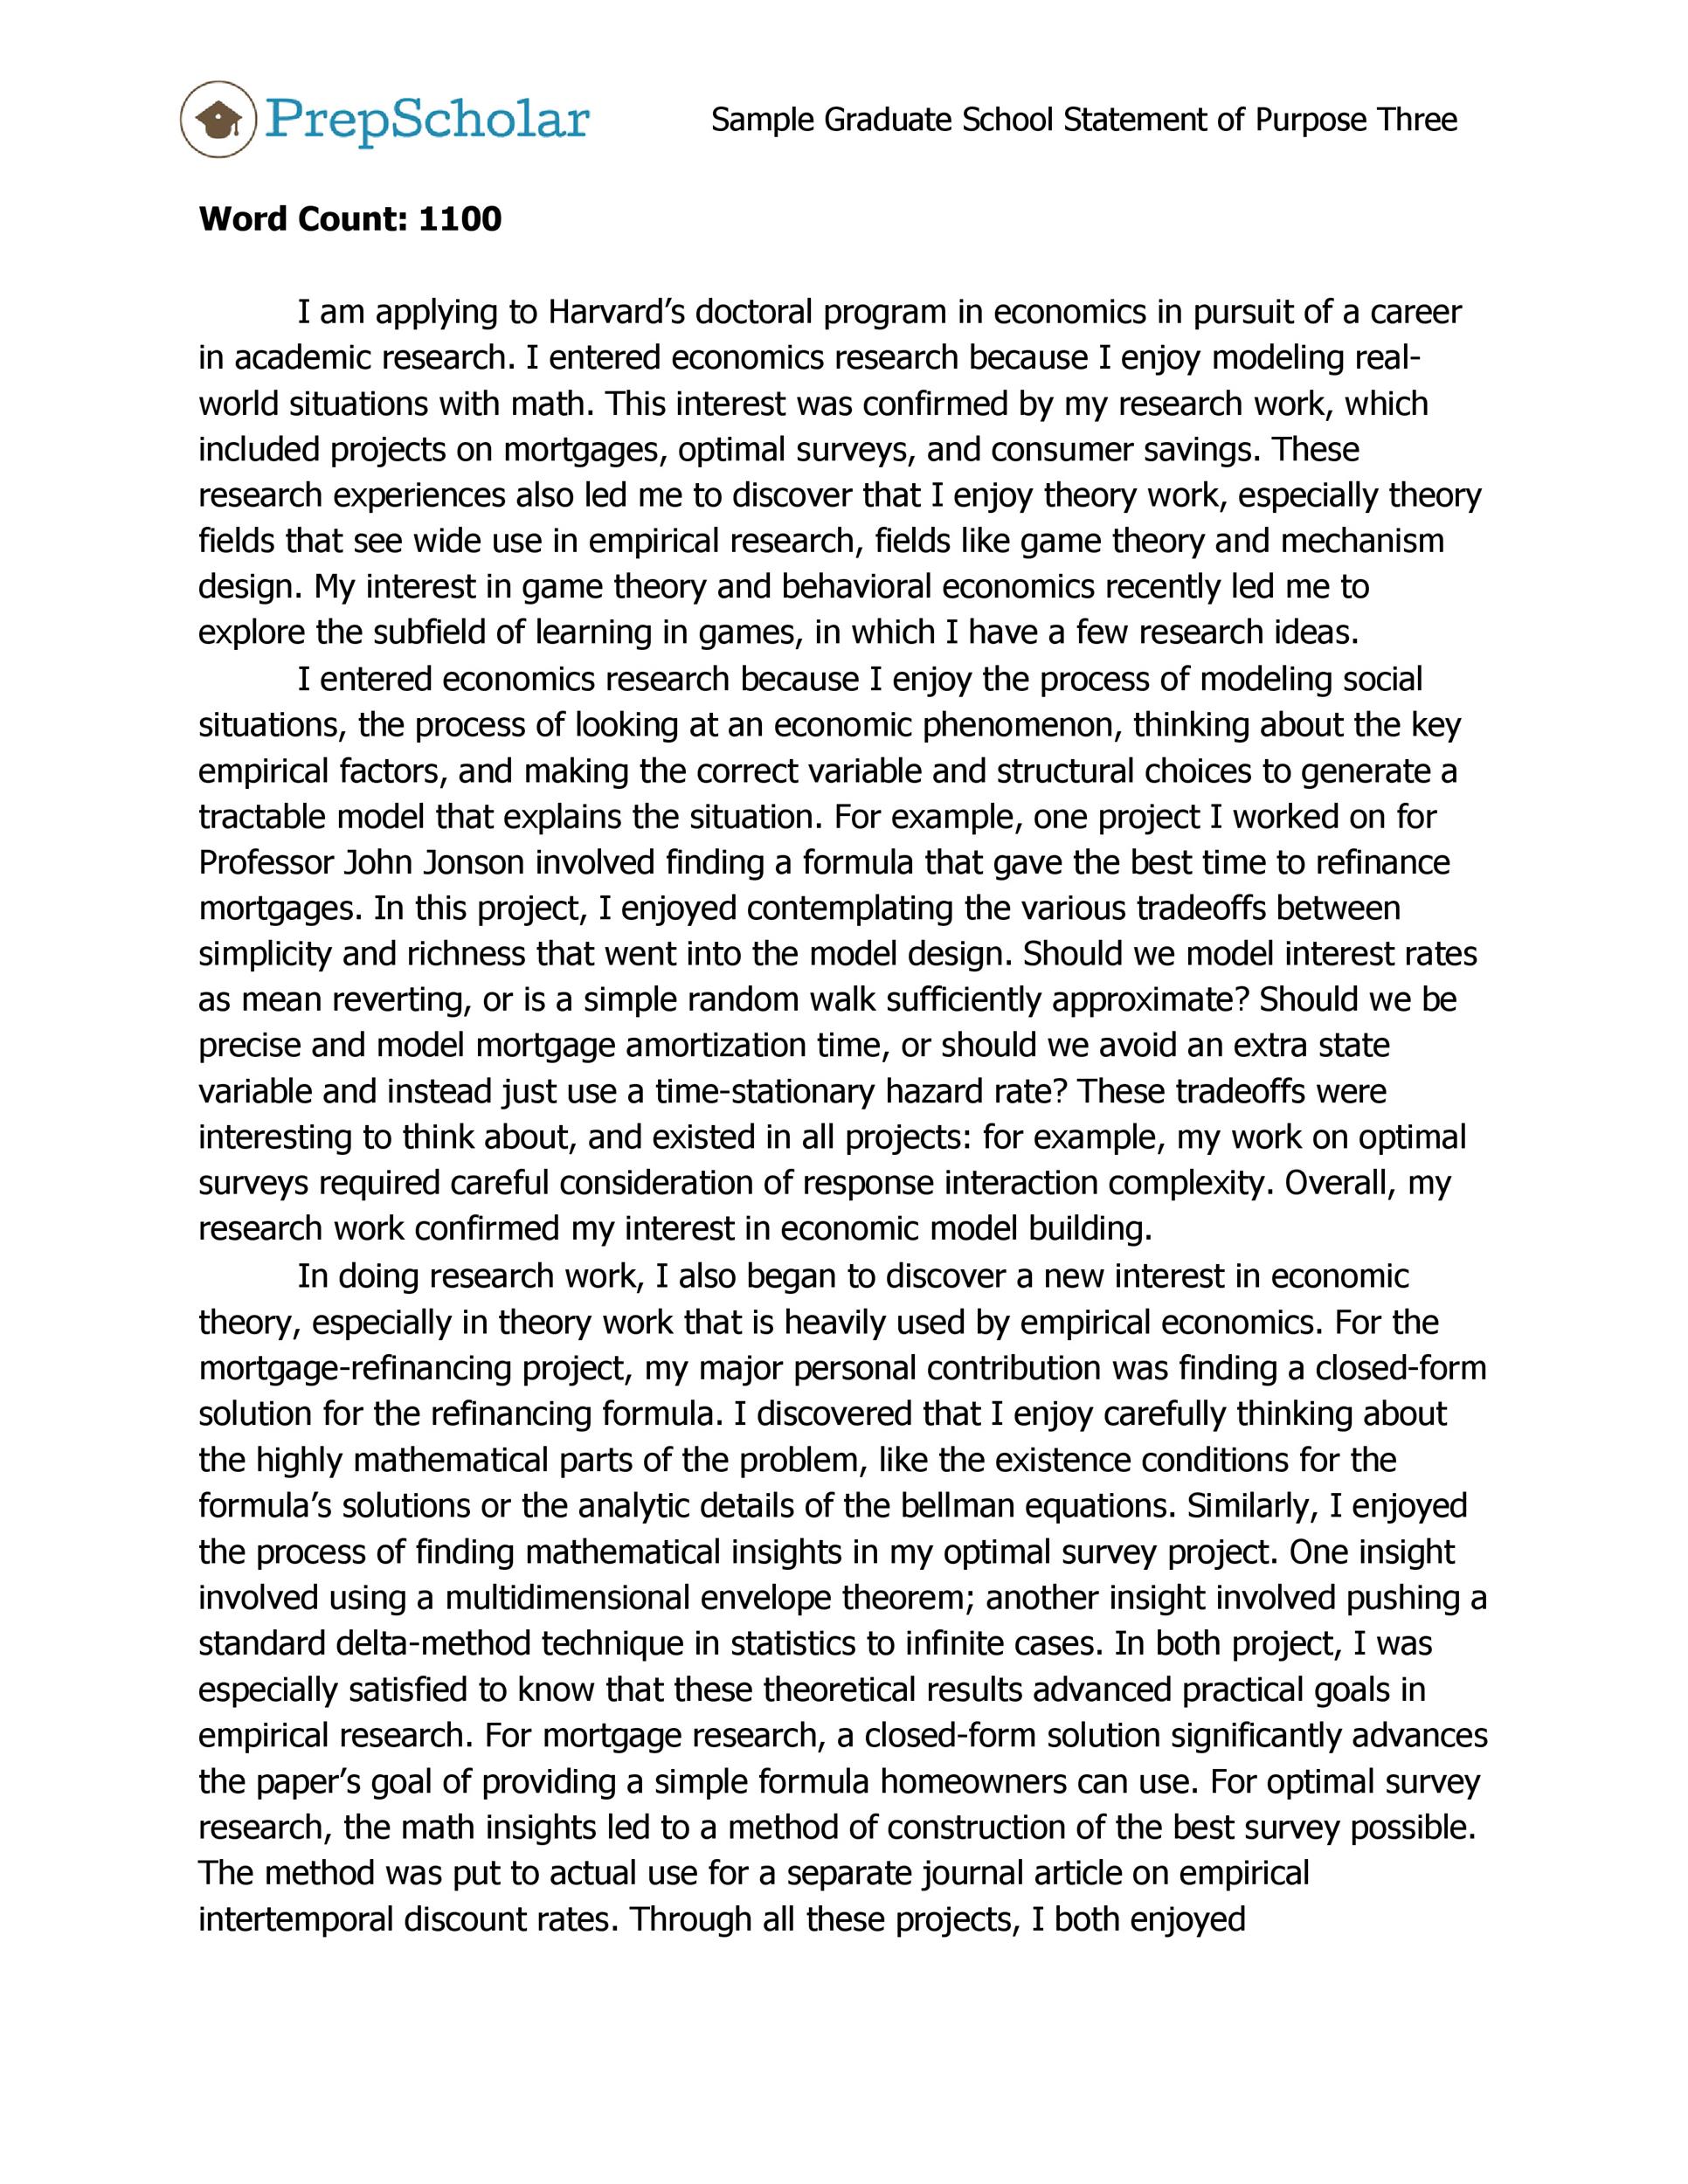 letter of purpose for graduate school samples